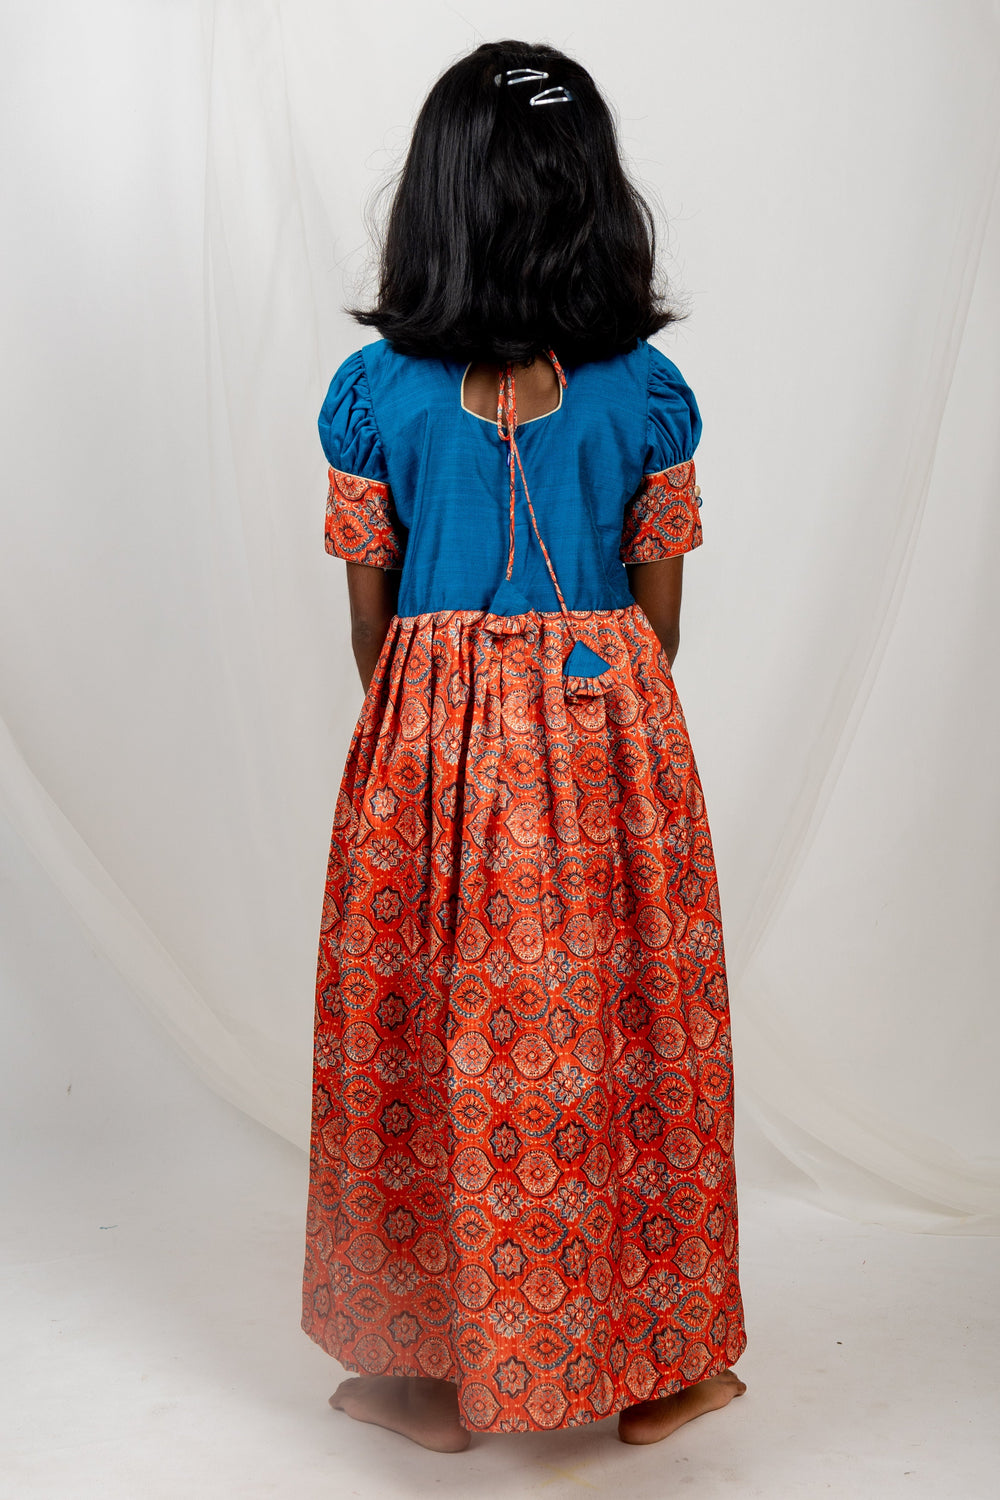 The Nesavu Kids Anarkali Latest Blue With Orange Designer Silk Frock For Girls With Embellishments psr silks Nesavu